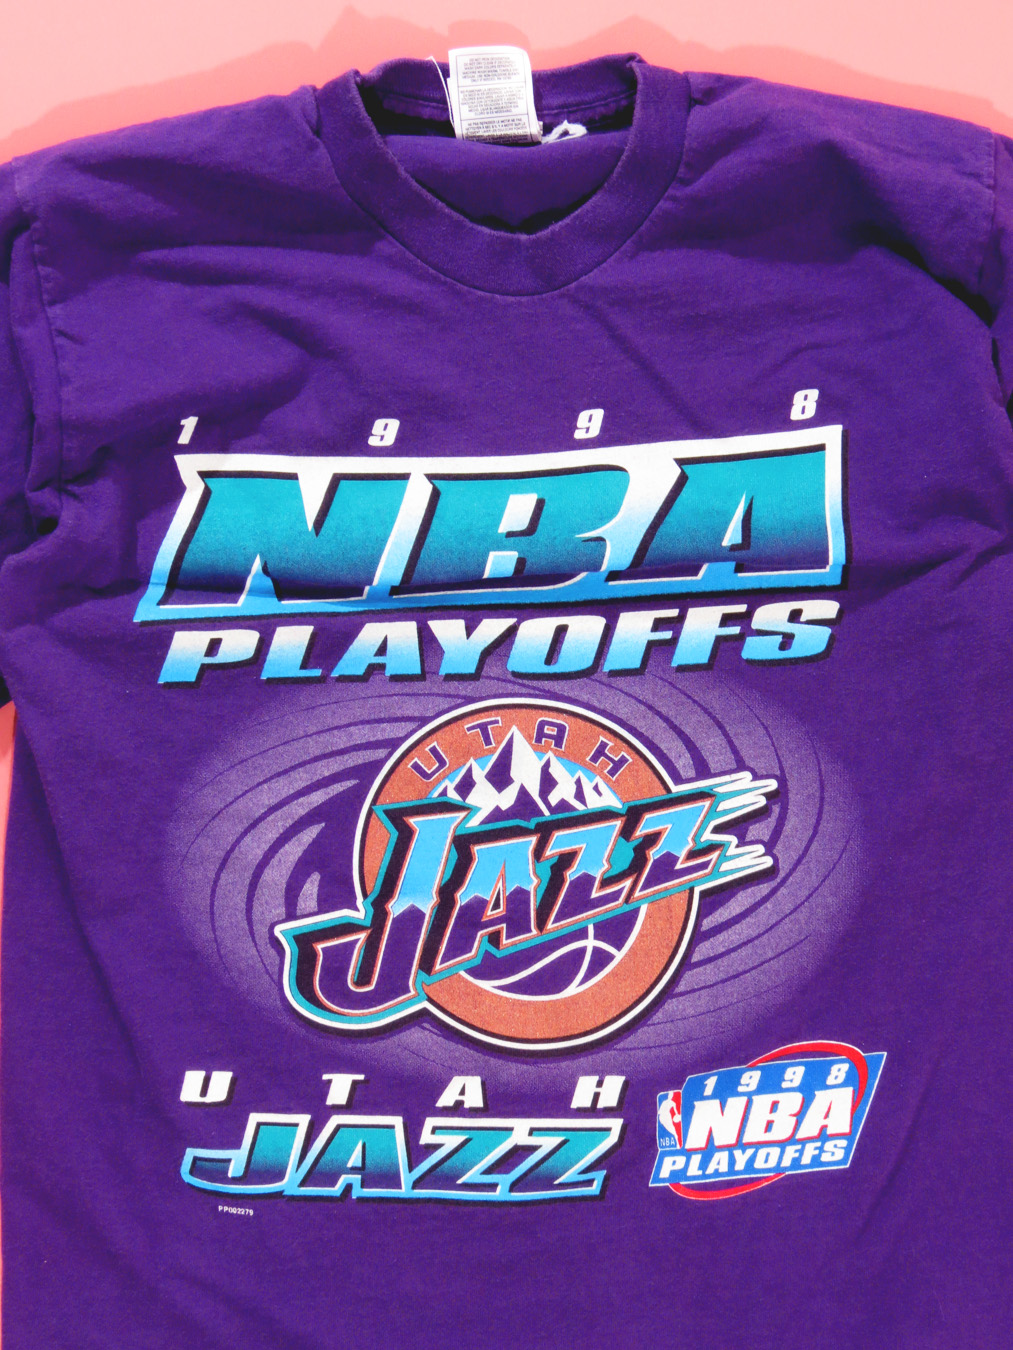 UniqueStylez801 Utah Jazz - Tie Dye Splatter - 2019 Take Note Playoff Shirt - Size Extra Large